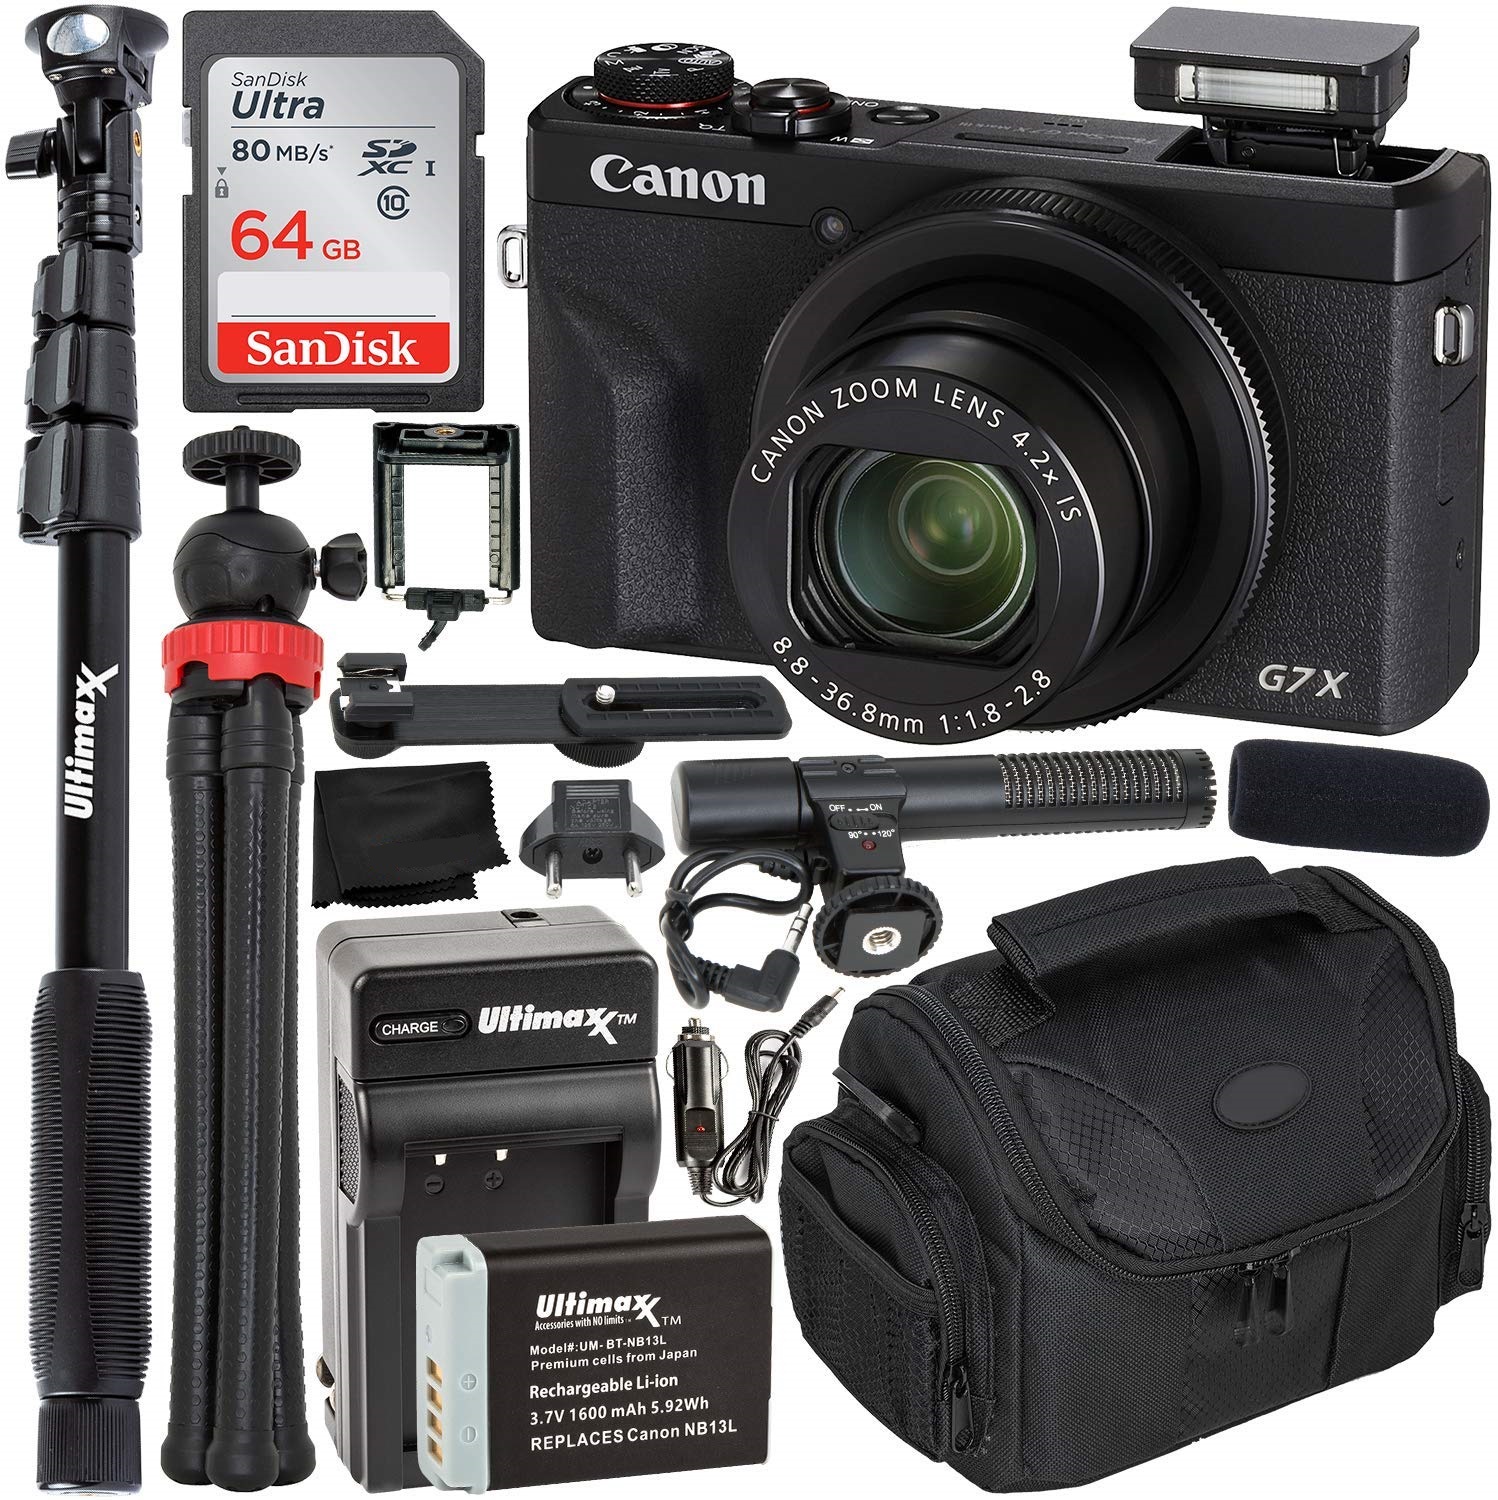 Canon PowerShot G7 X Mark III Digital Camera (Black) - 3637C001 Must-Have Starter YouTube Vlogging Kit